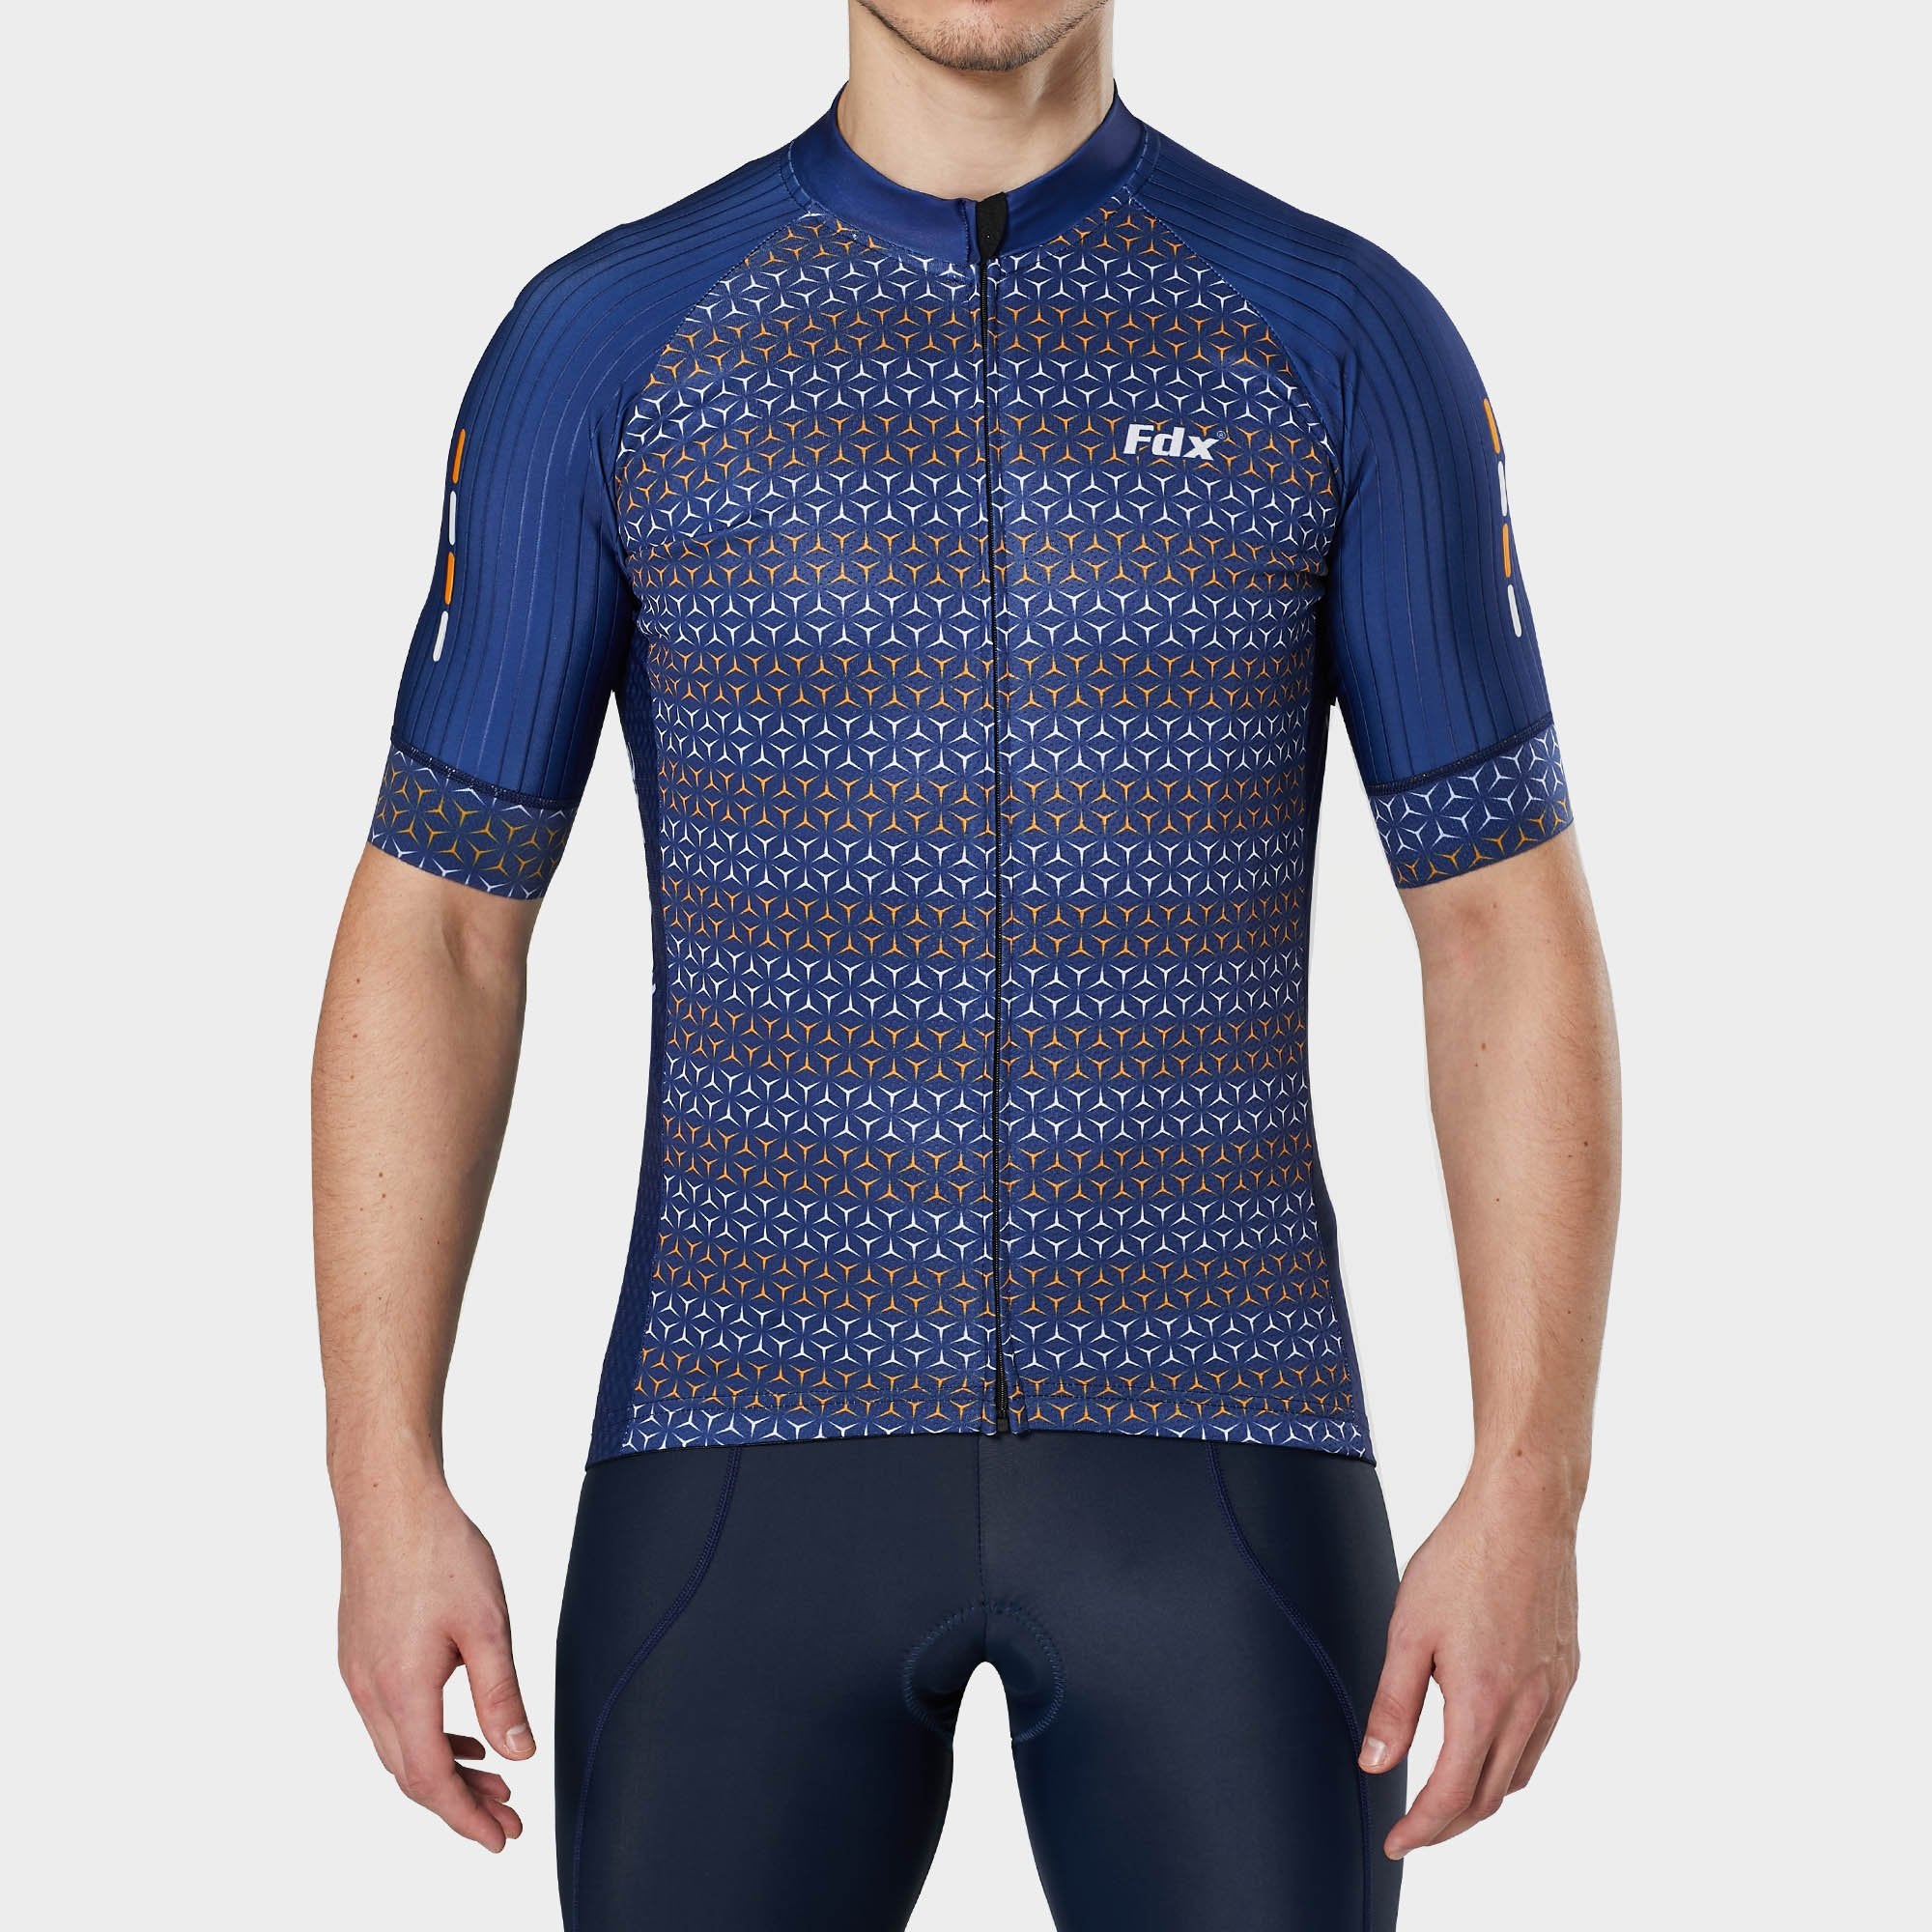 Fdx Vega Blue Men's Short Sleeve Summer Cycling Jersey